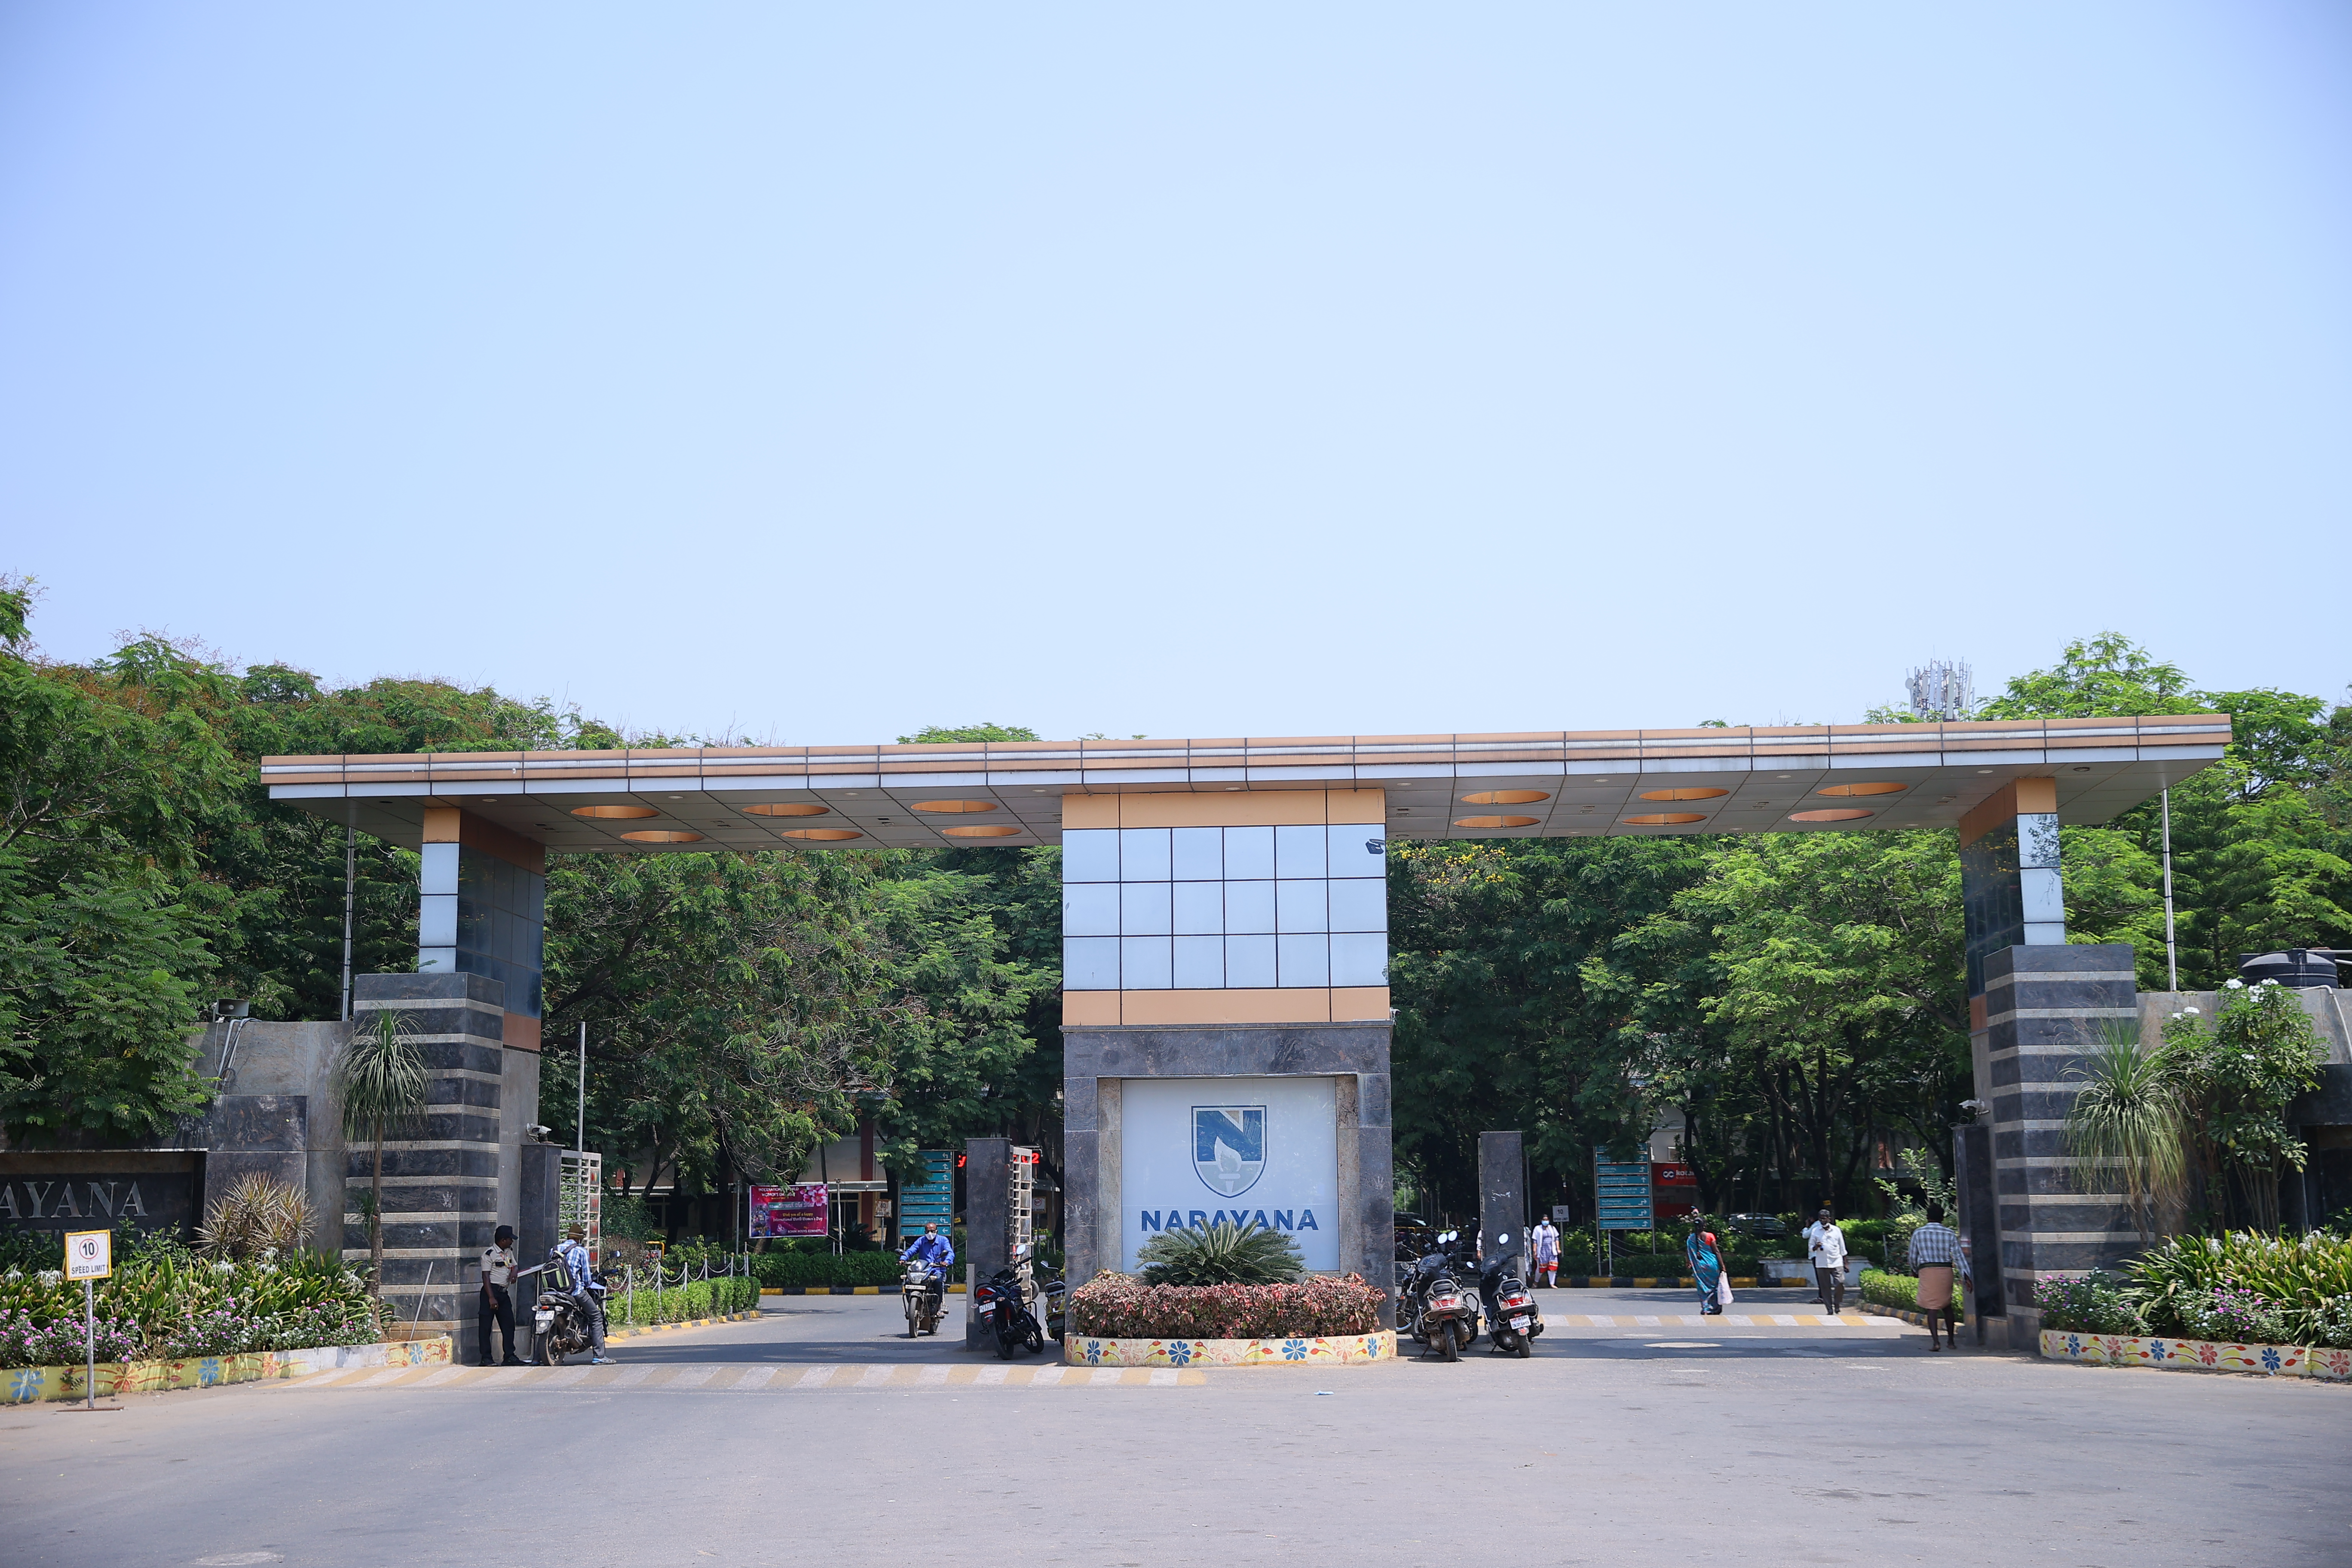 Sree Narayana Nursing college